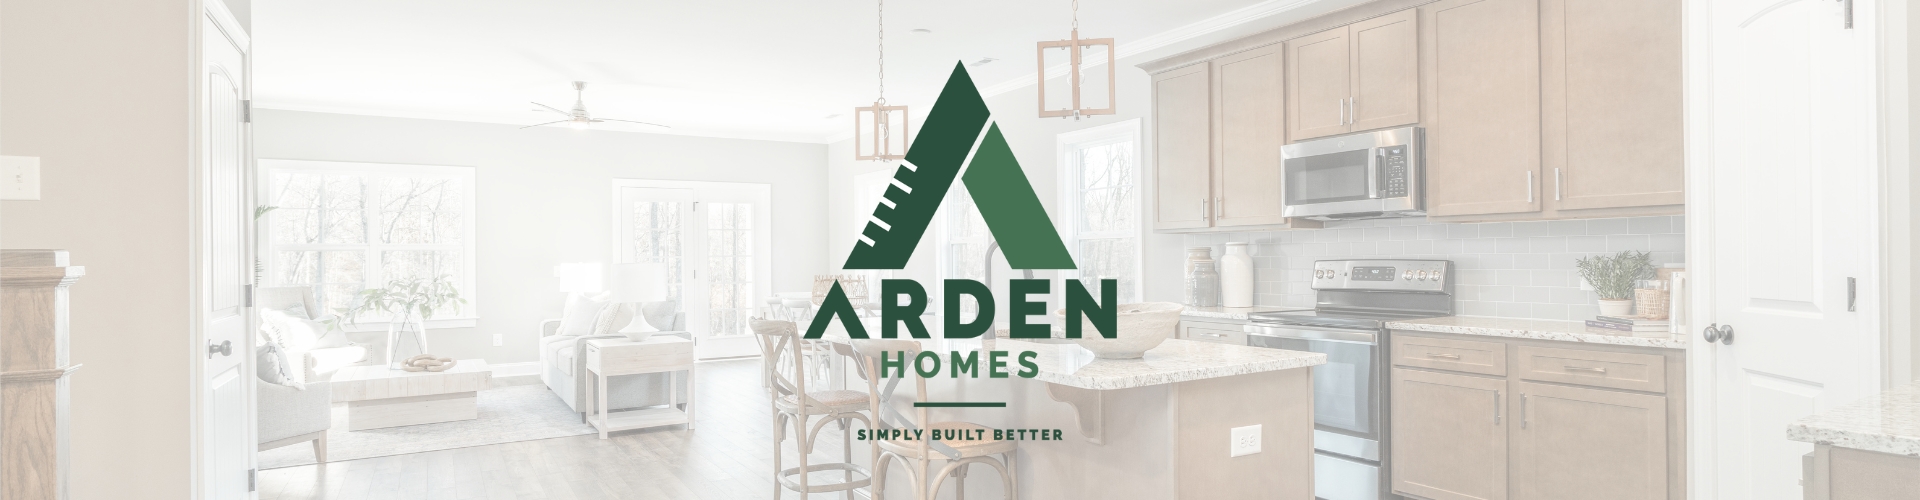 Arden Homes Slide Show